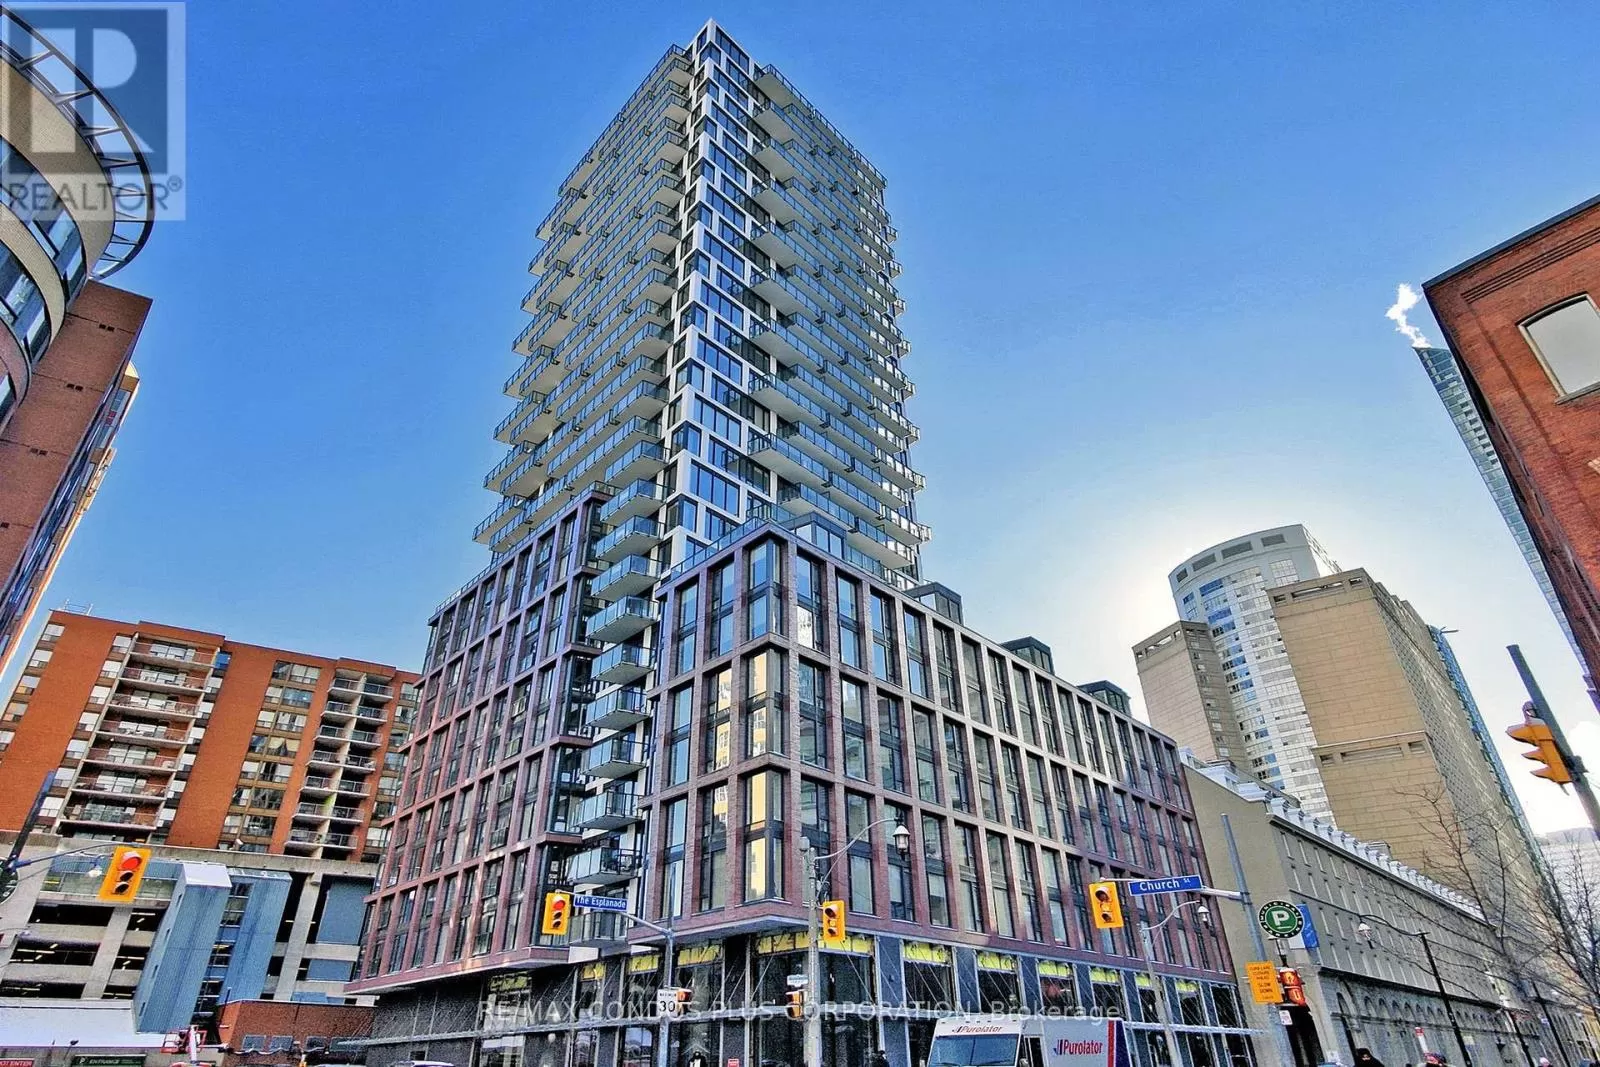 Apartment for rent: 302 - 2a Church Street, Toronto, Ontario M5E 0E1